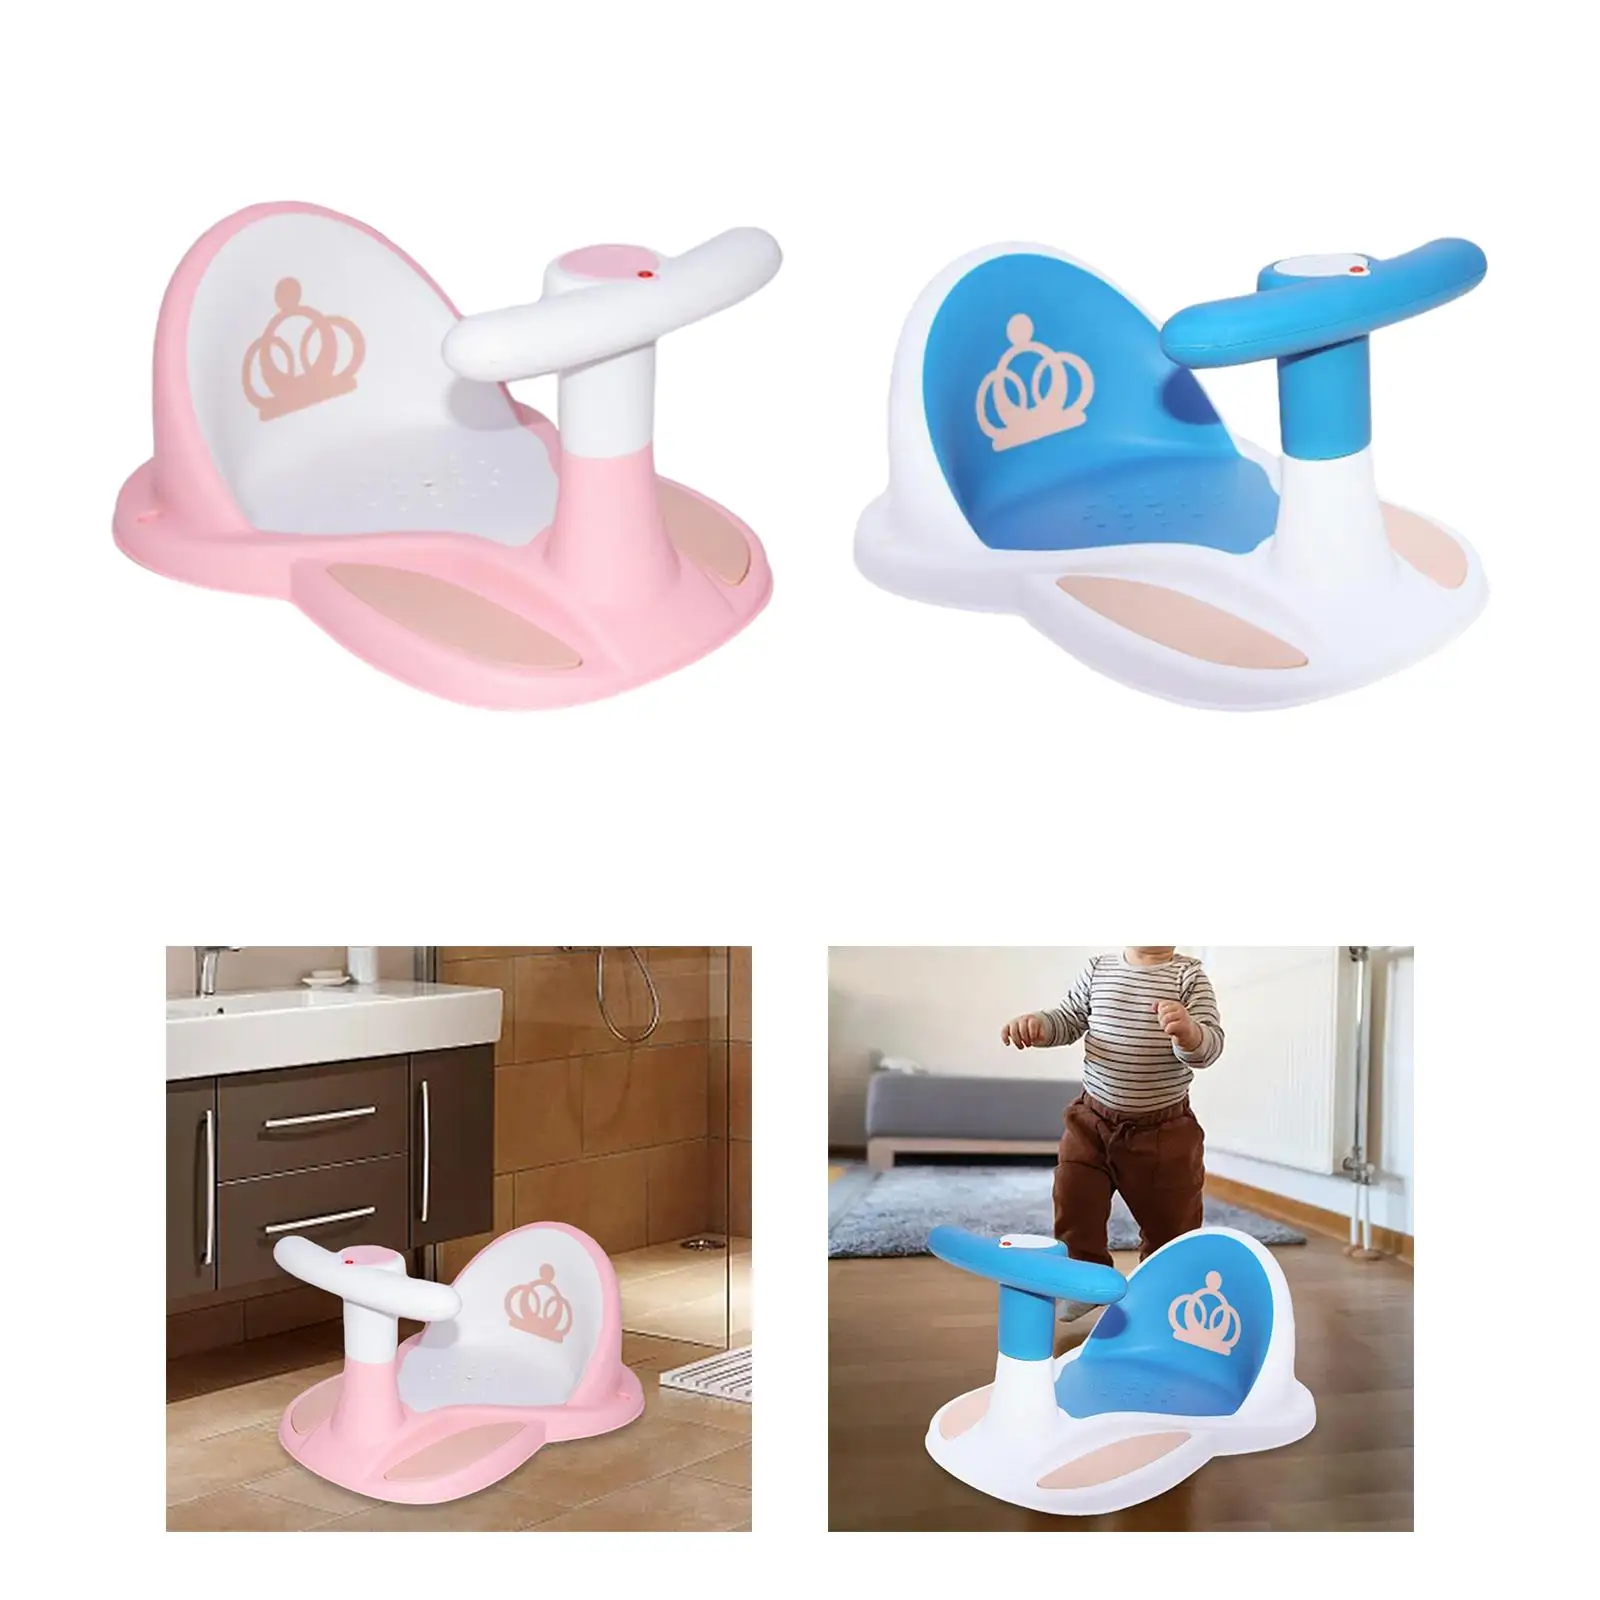 Children Shower Chair Bathroom Stable Portable Newborn Shower Seats Baby Bath Tub Seat for Infants Kids Toddlers Girls Boys